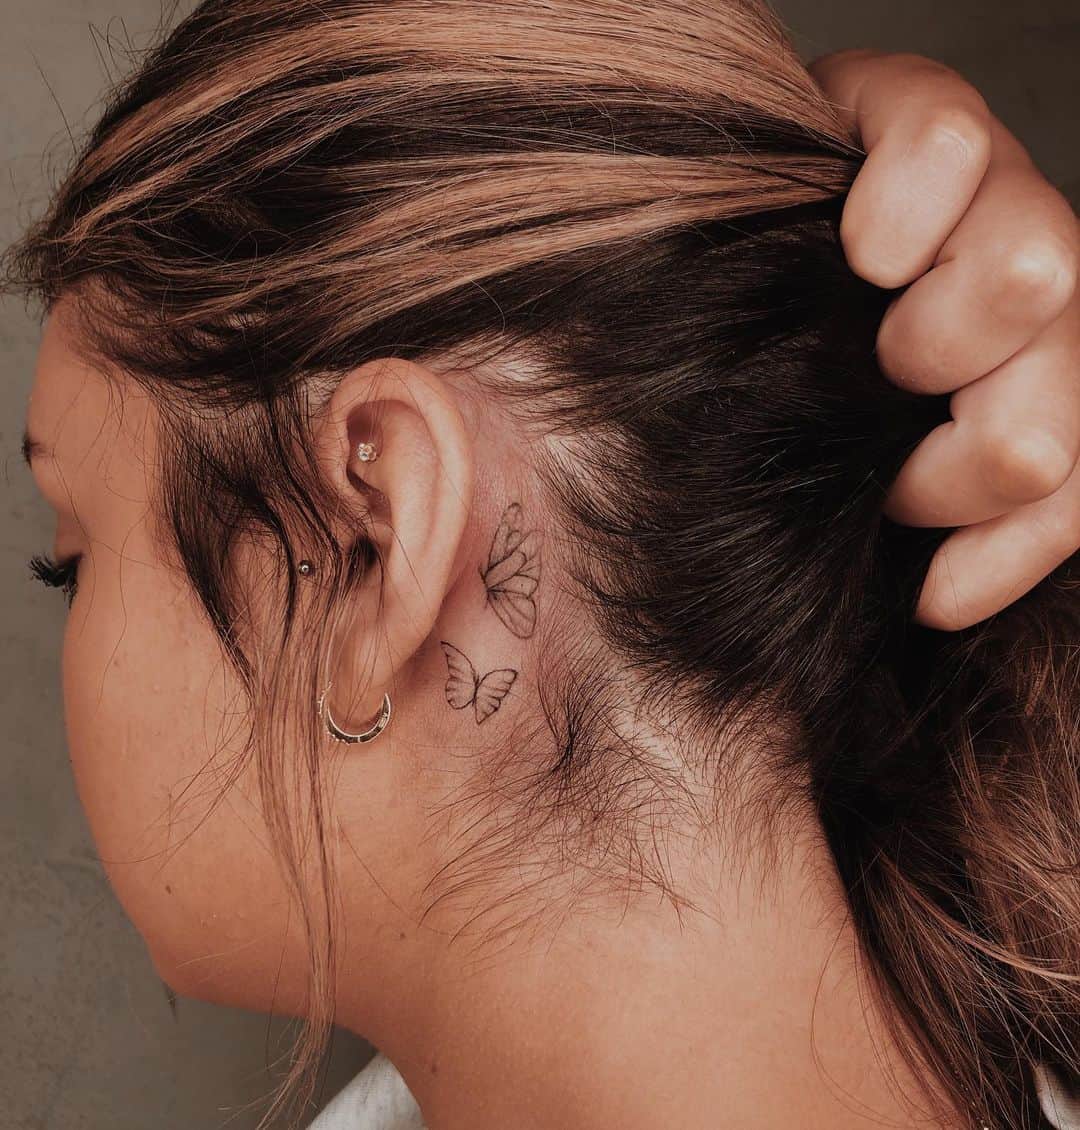 Butterfly tattoo behind ear